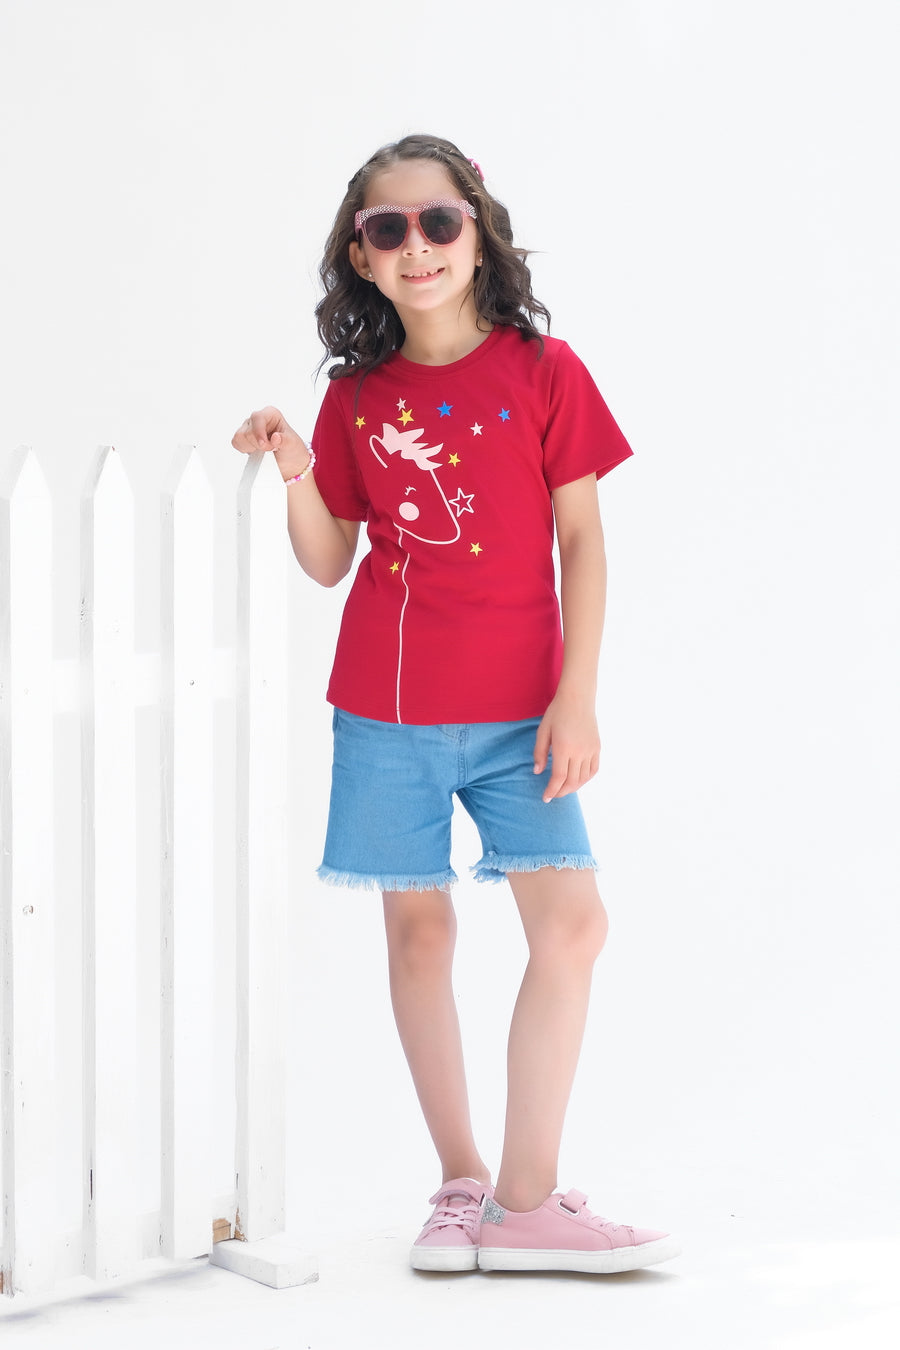 Star - Half sleeves T-shirts For Kids - Maroon - SBT-354